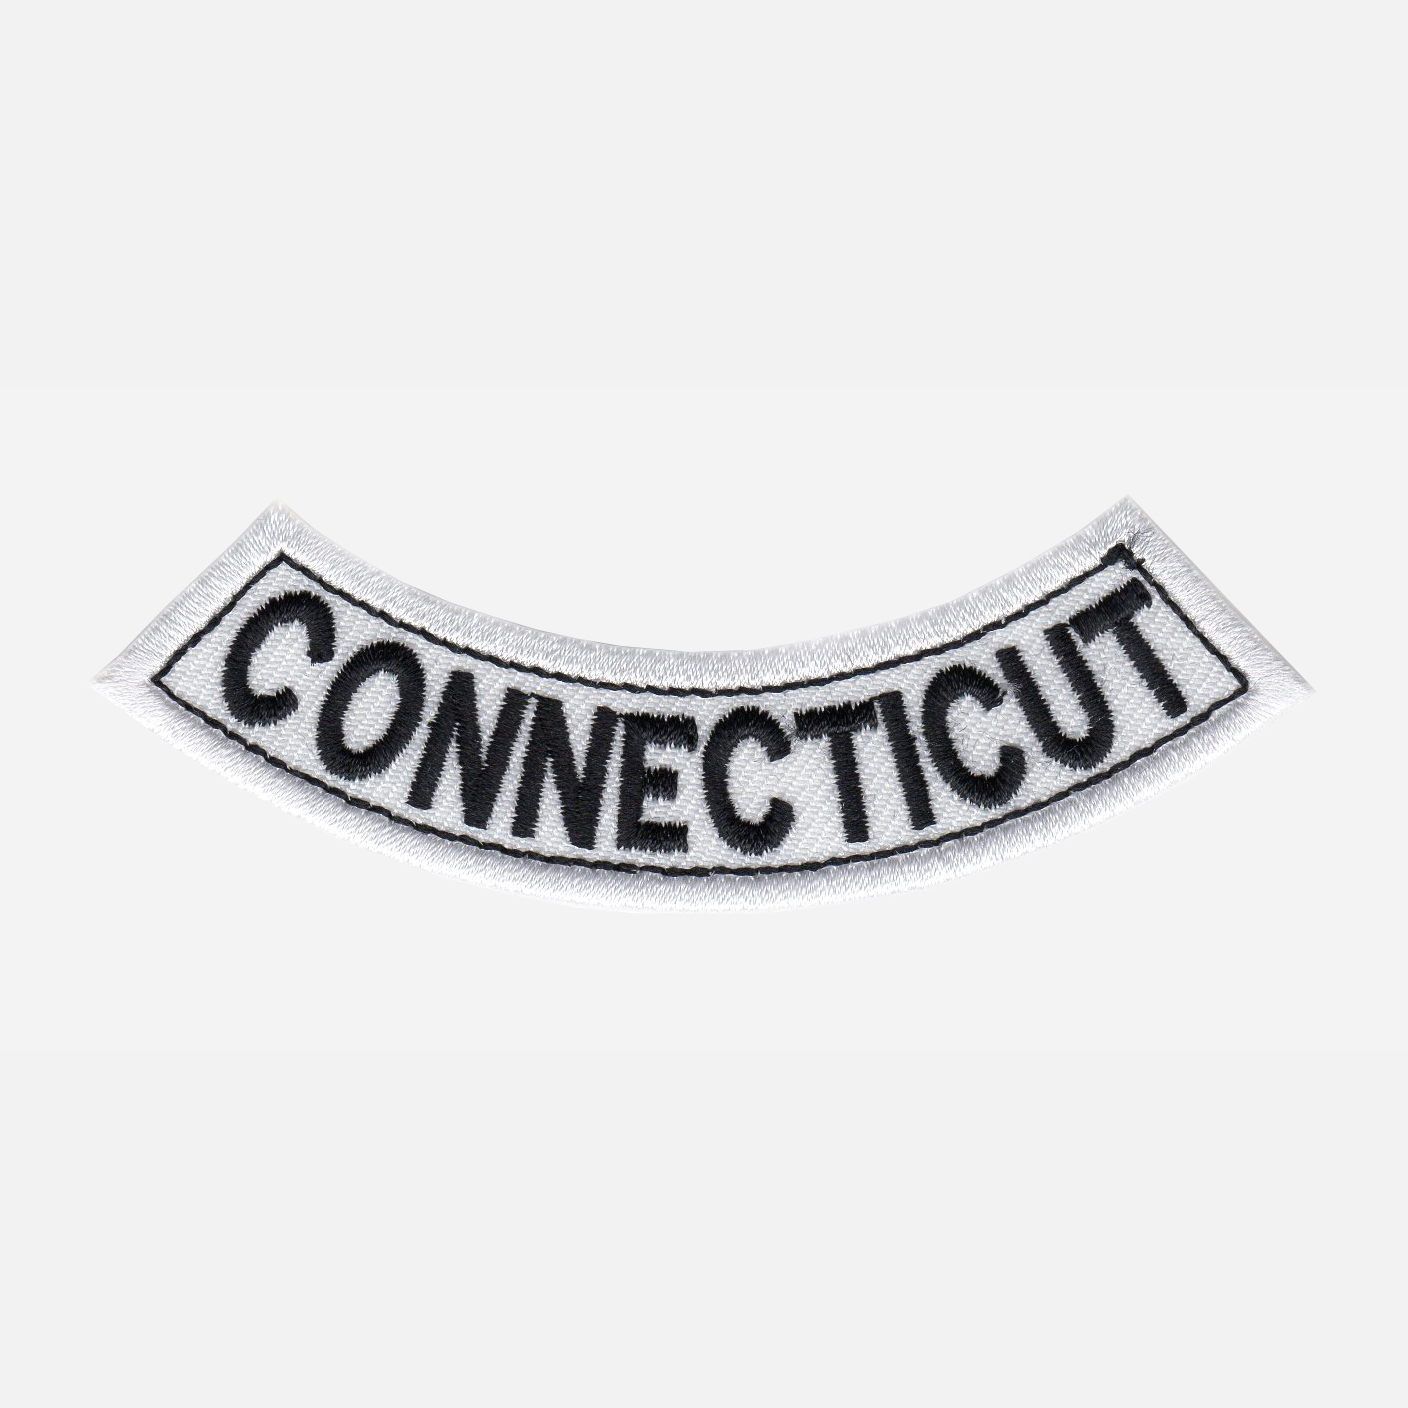 Connecticut Mini Bottom Rocker Embroidered Vest Patch